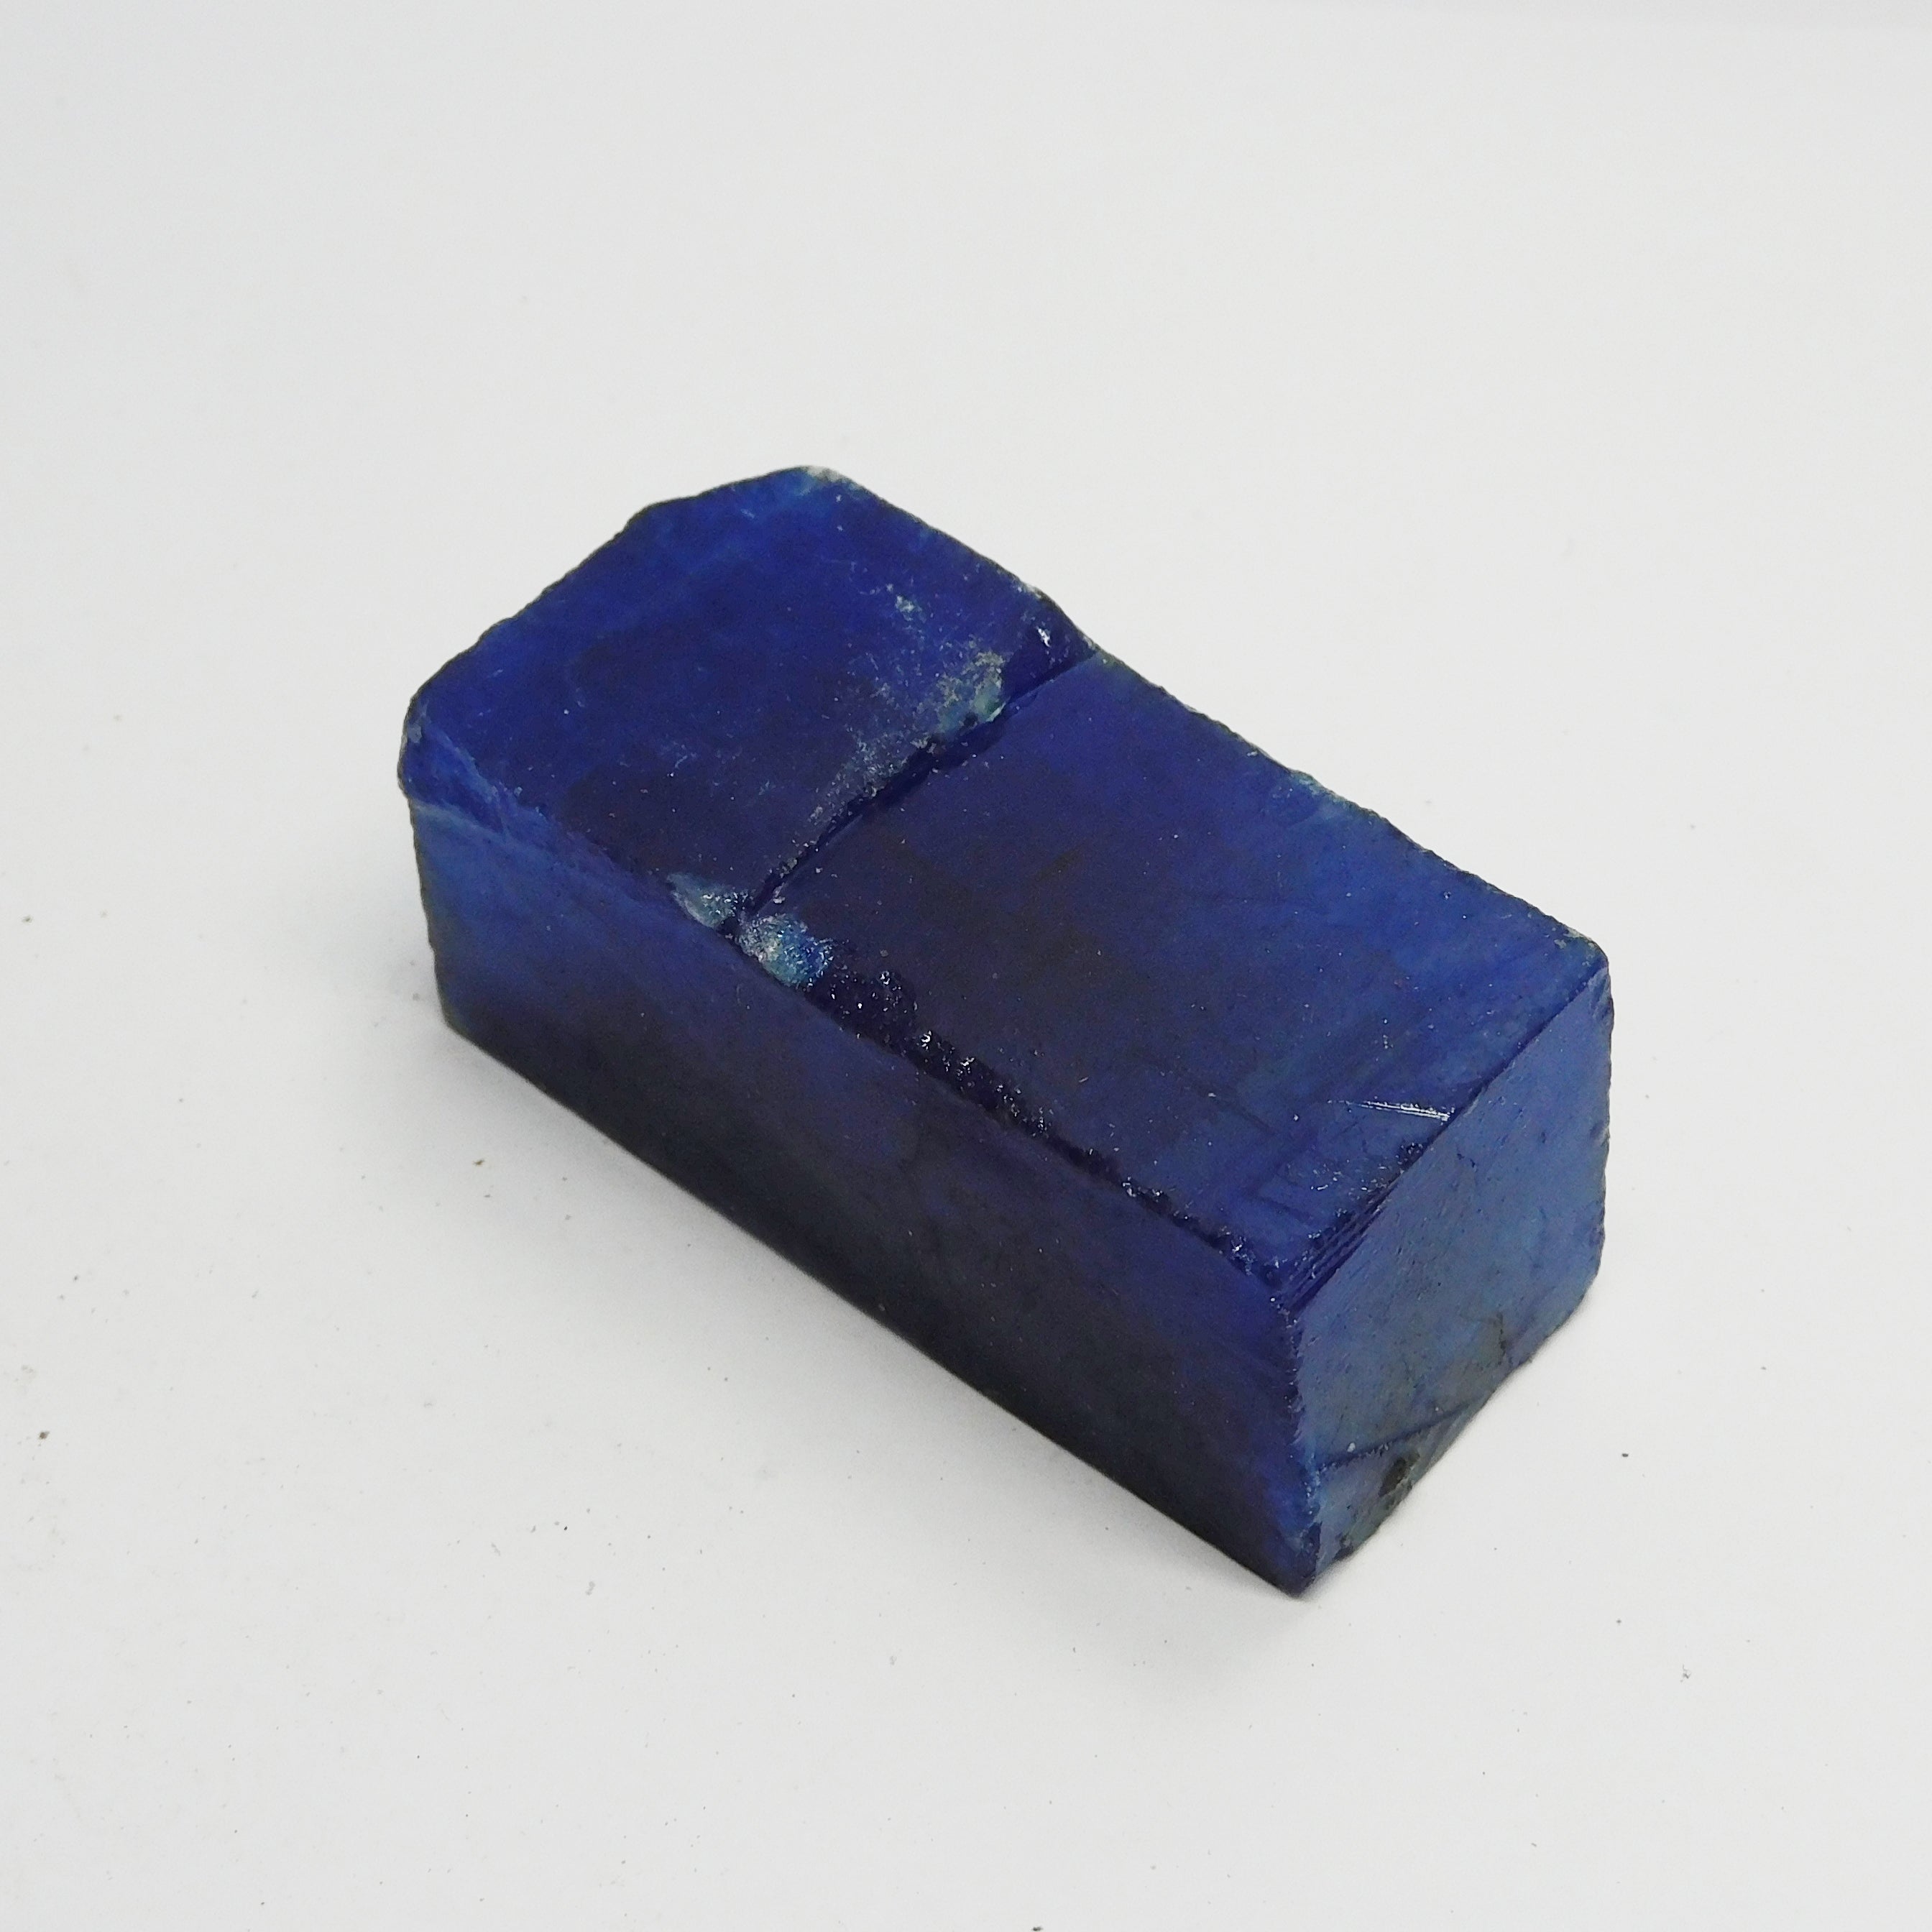 Tanzanite Stones !! Uncut Rough Tanzanite 411.60 Carat Natural Blue Color Certified Tanzanite Loose Gemstone | Best For Customization & Artistic Expression | Offer On Rough